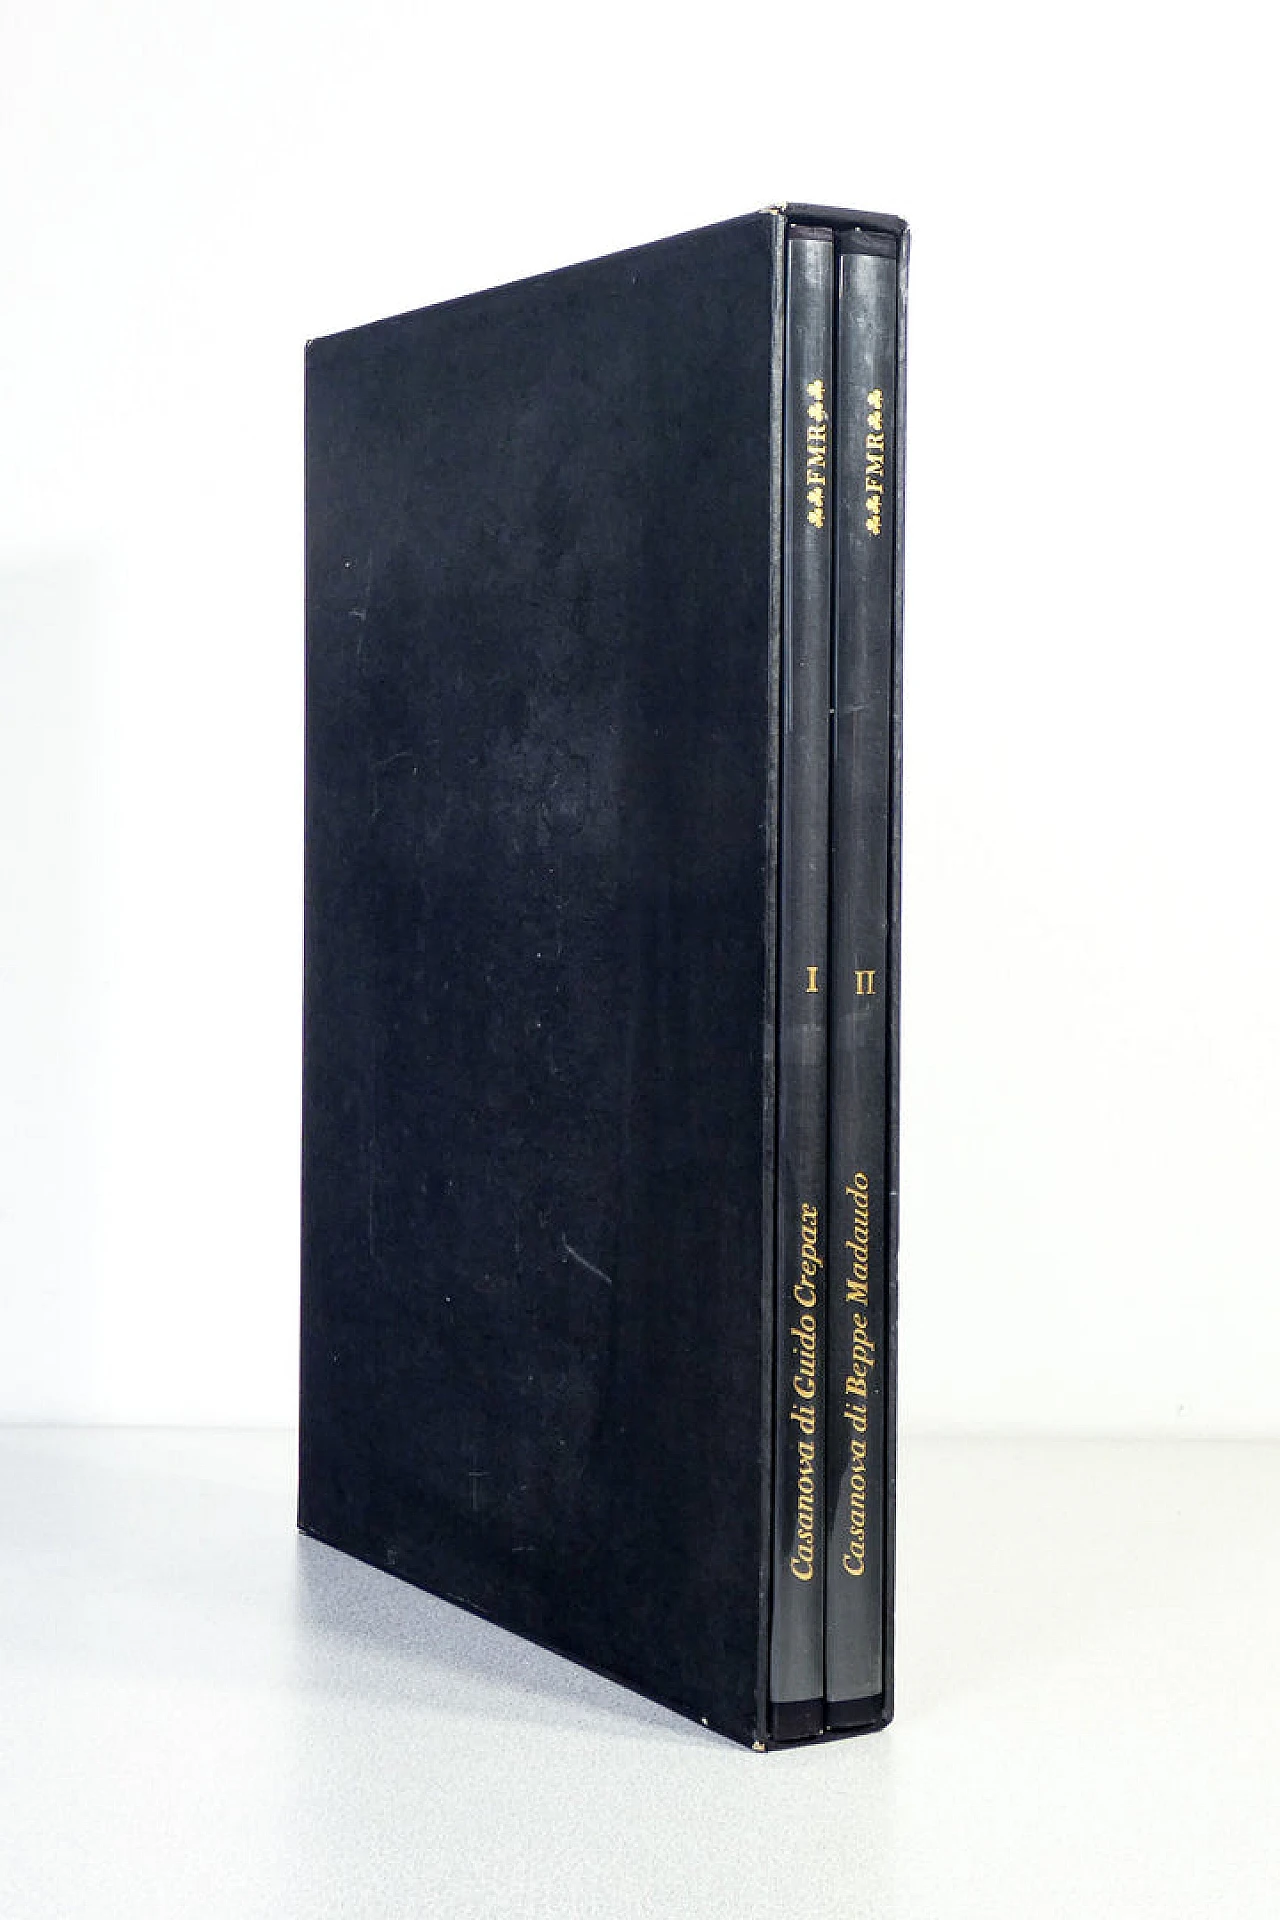 Crepax and Madaudo, Casanova, pair of volumes, FMR Editore, 1977 18